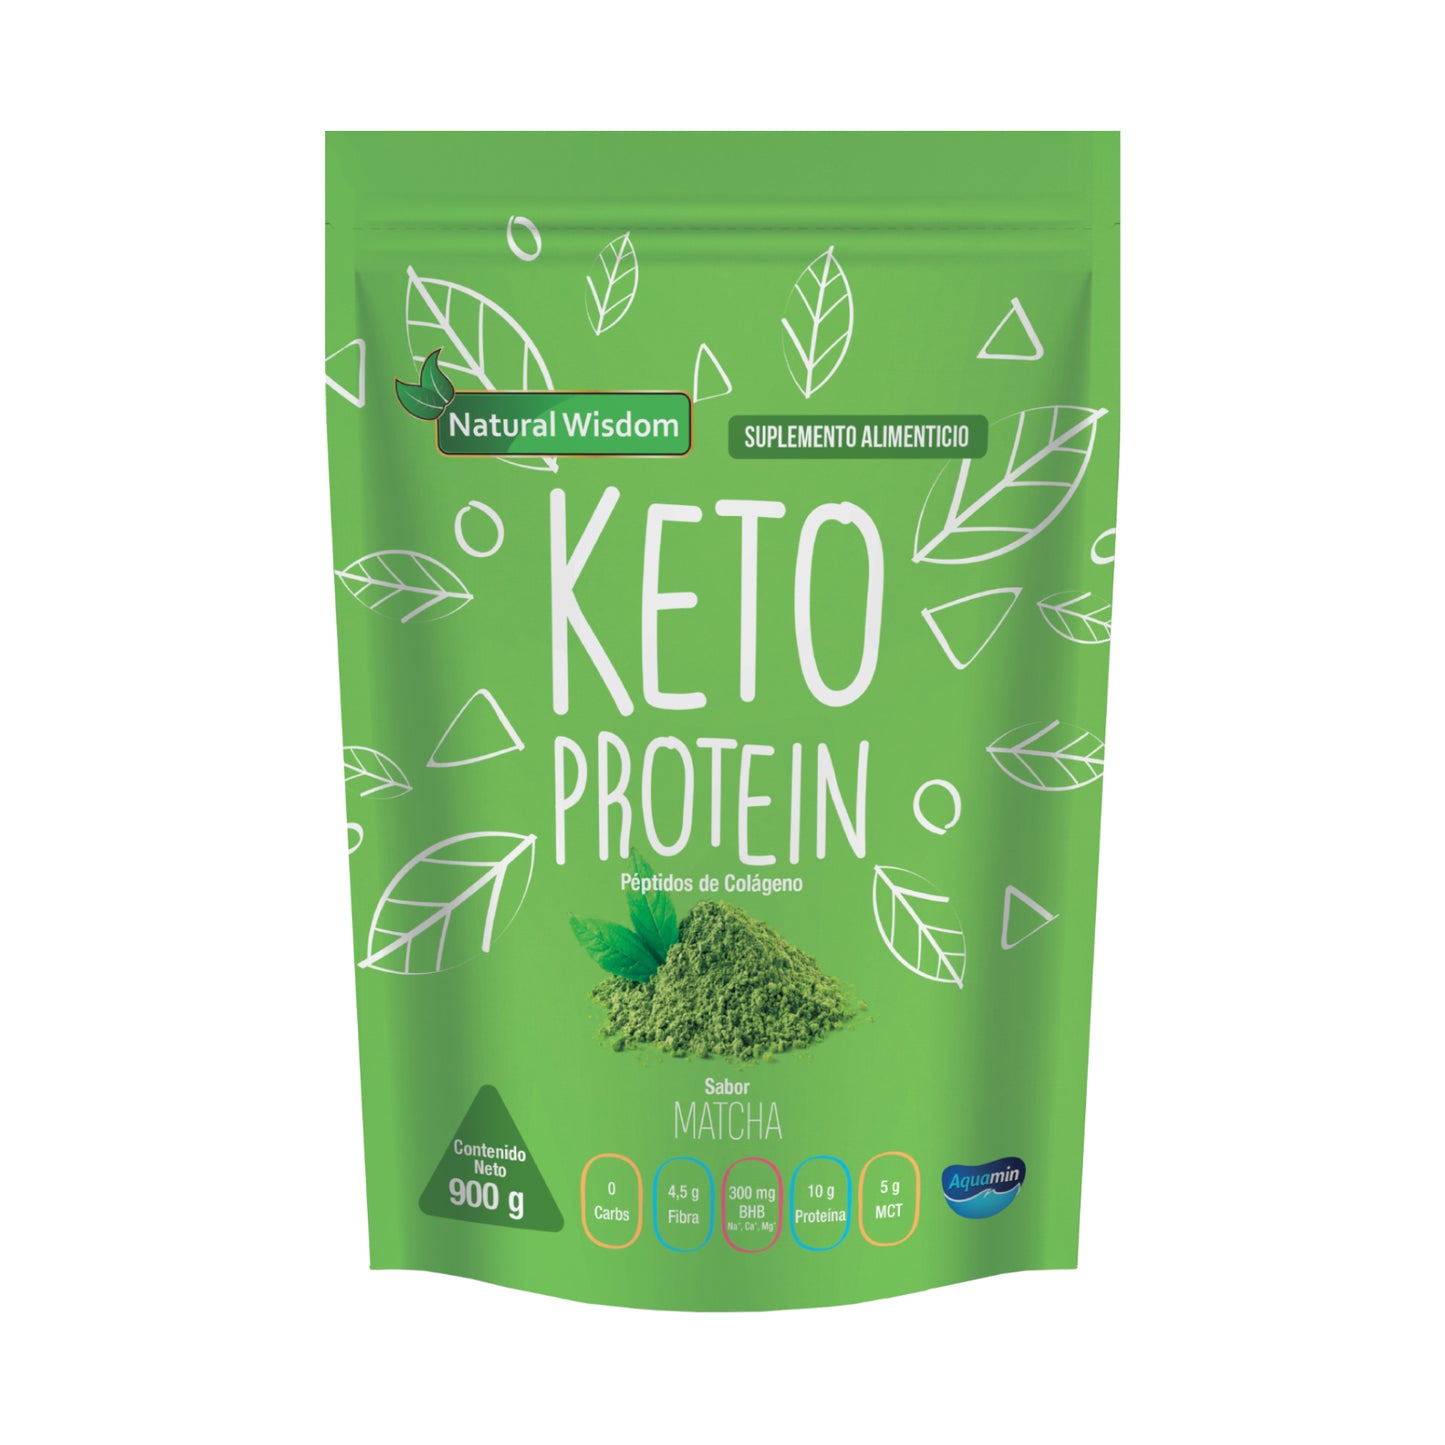 Proteína Keto sabor Matcha 900 g | Suplemento Alimenticio | Natural Wisdom®